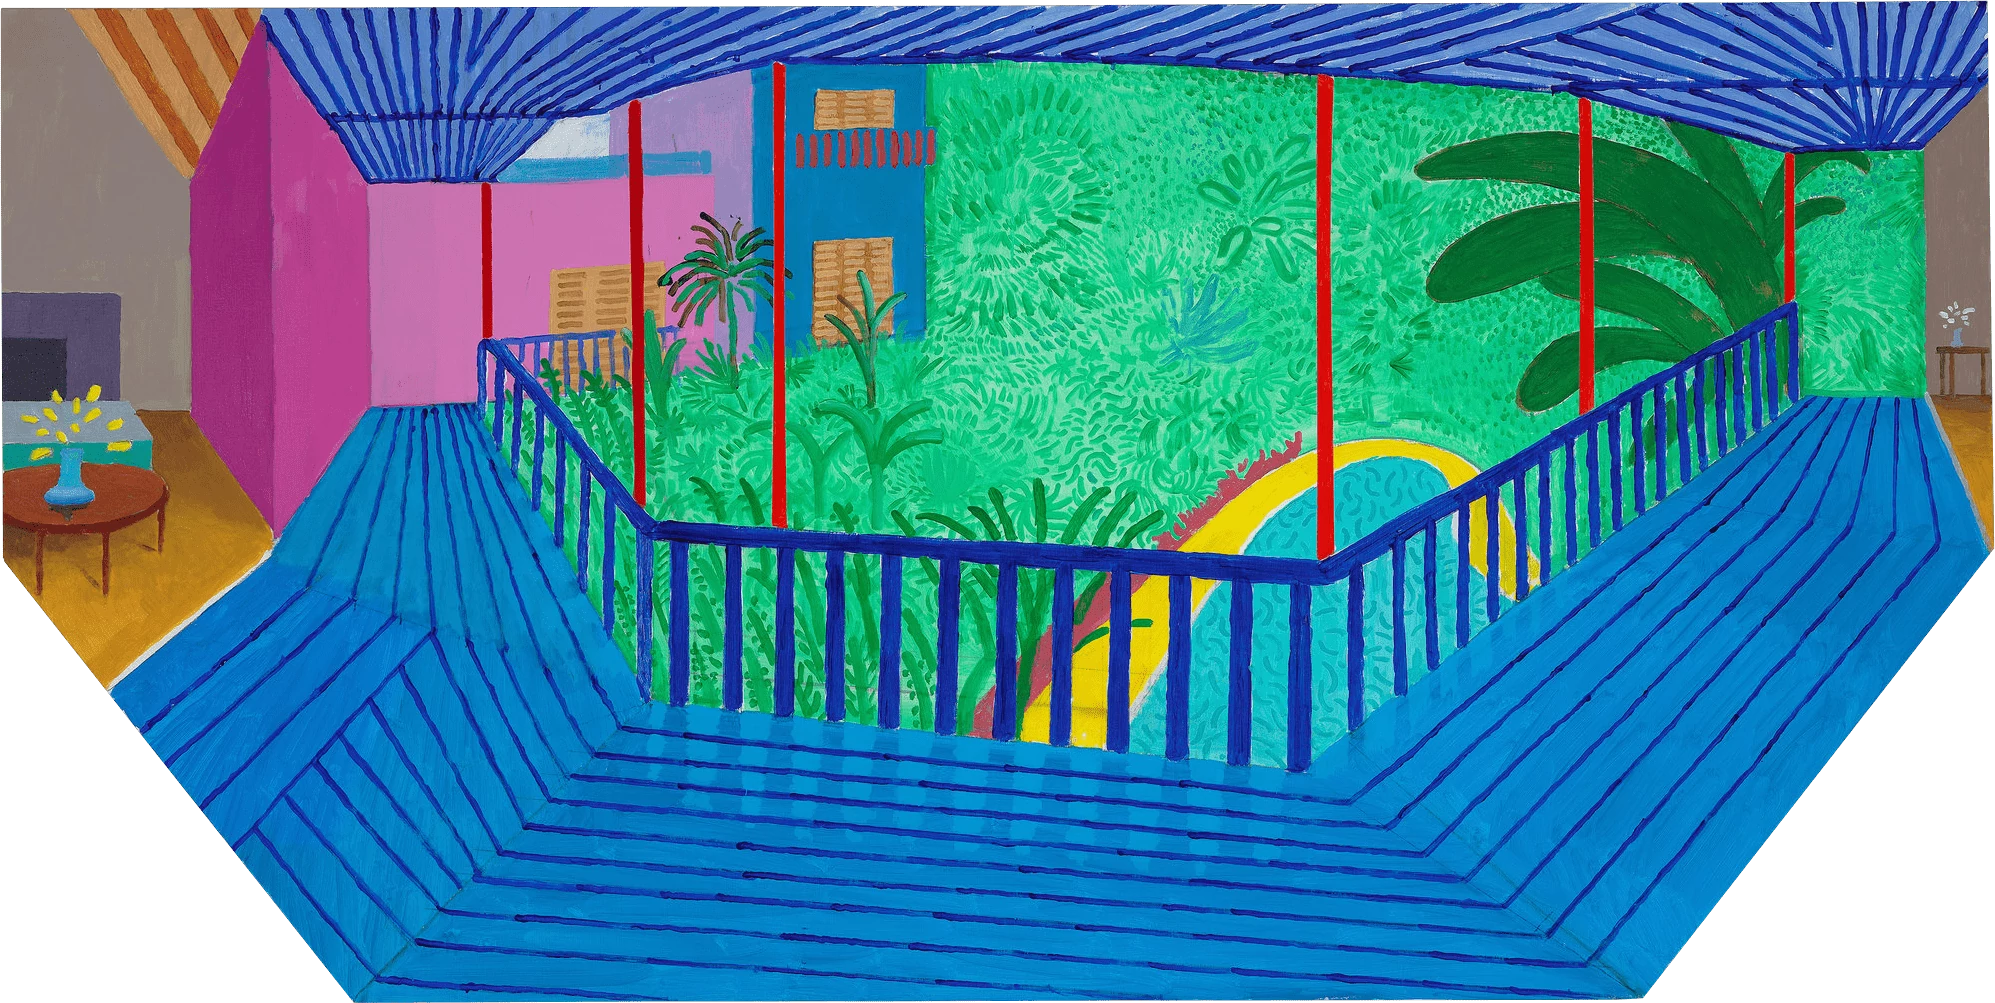 A Bigger Interior With Blue Terrace and Garden, David Hockney